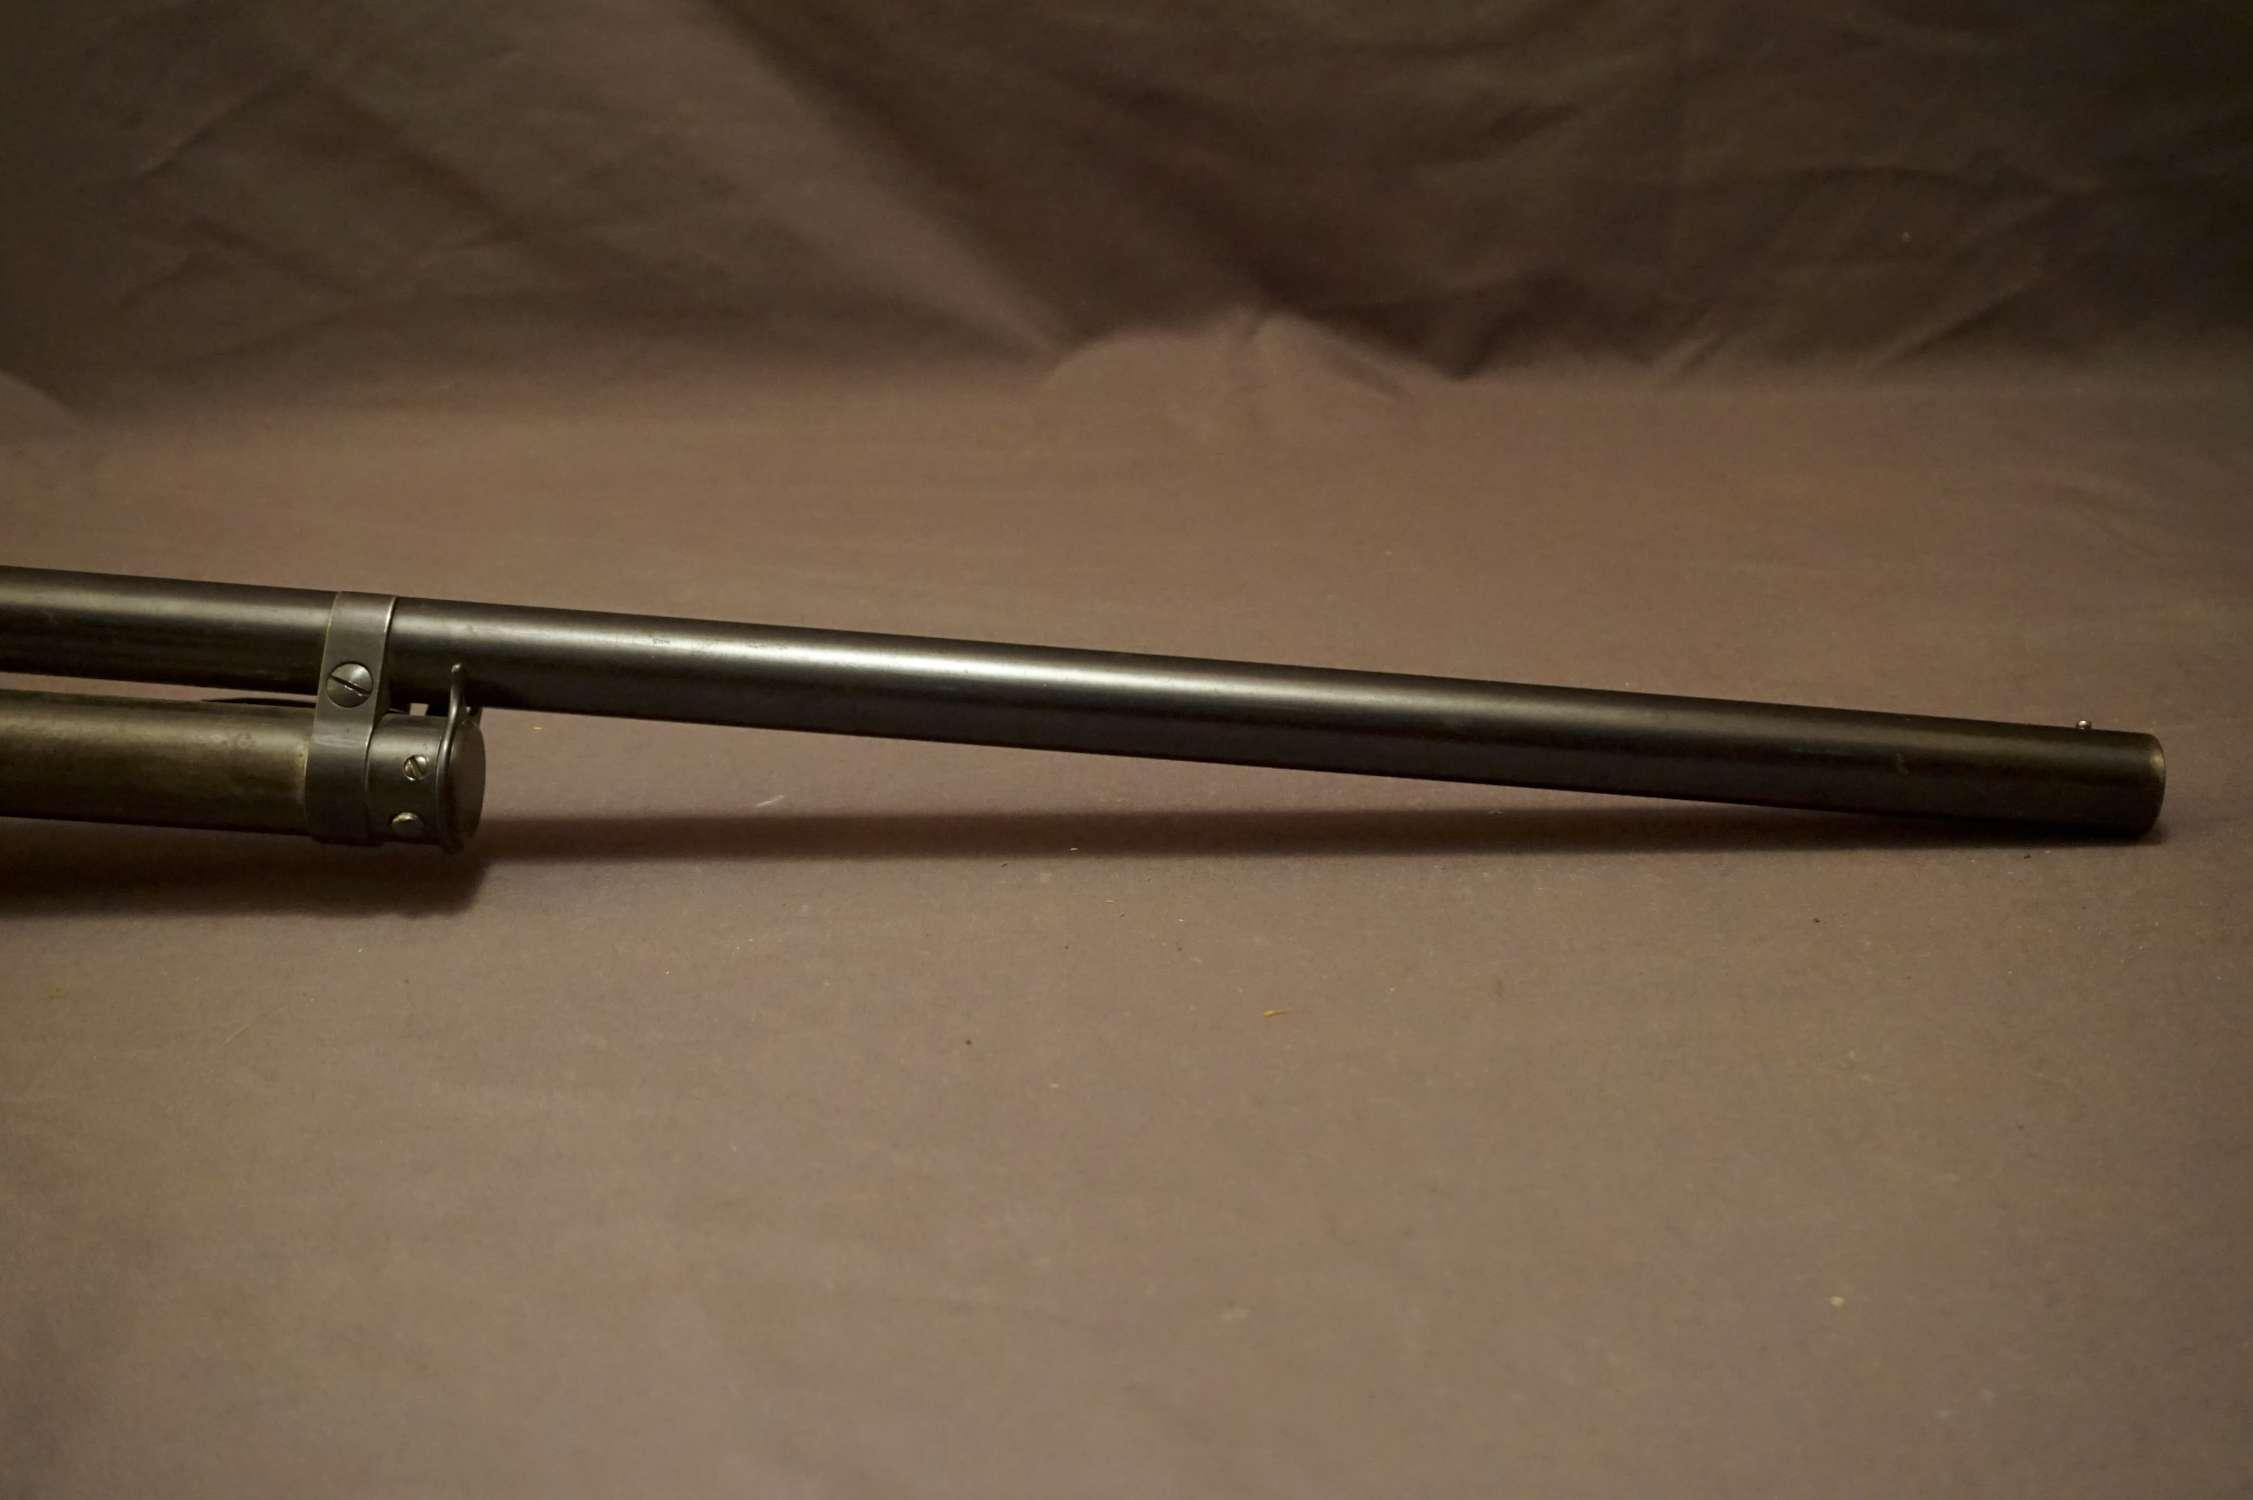 Winchester M. 12 12ga Pump Shotgun